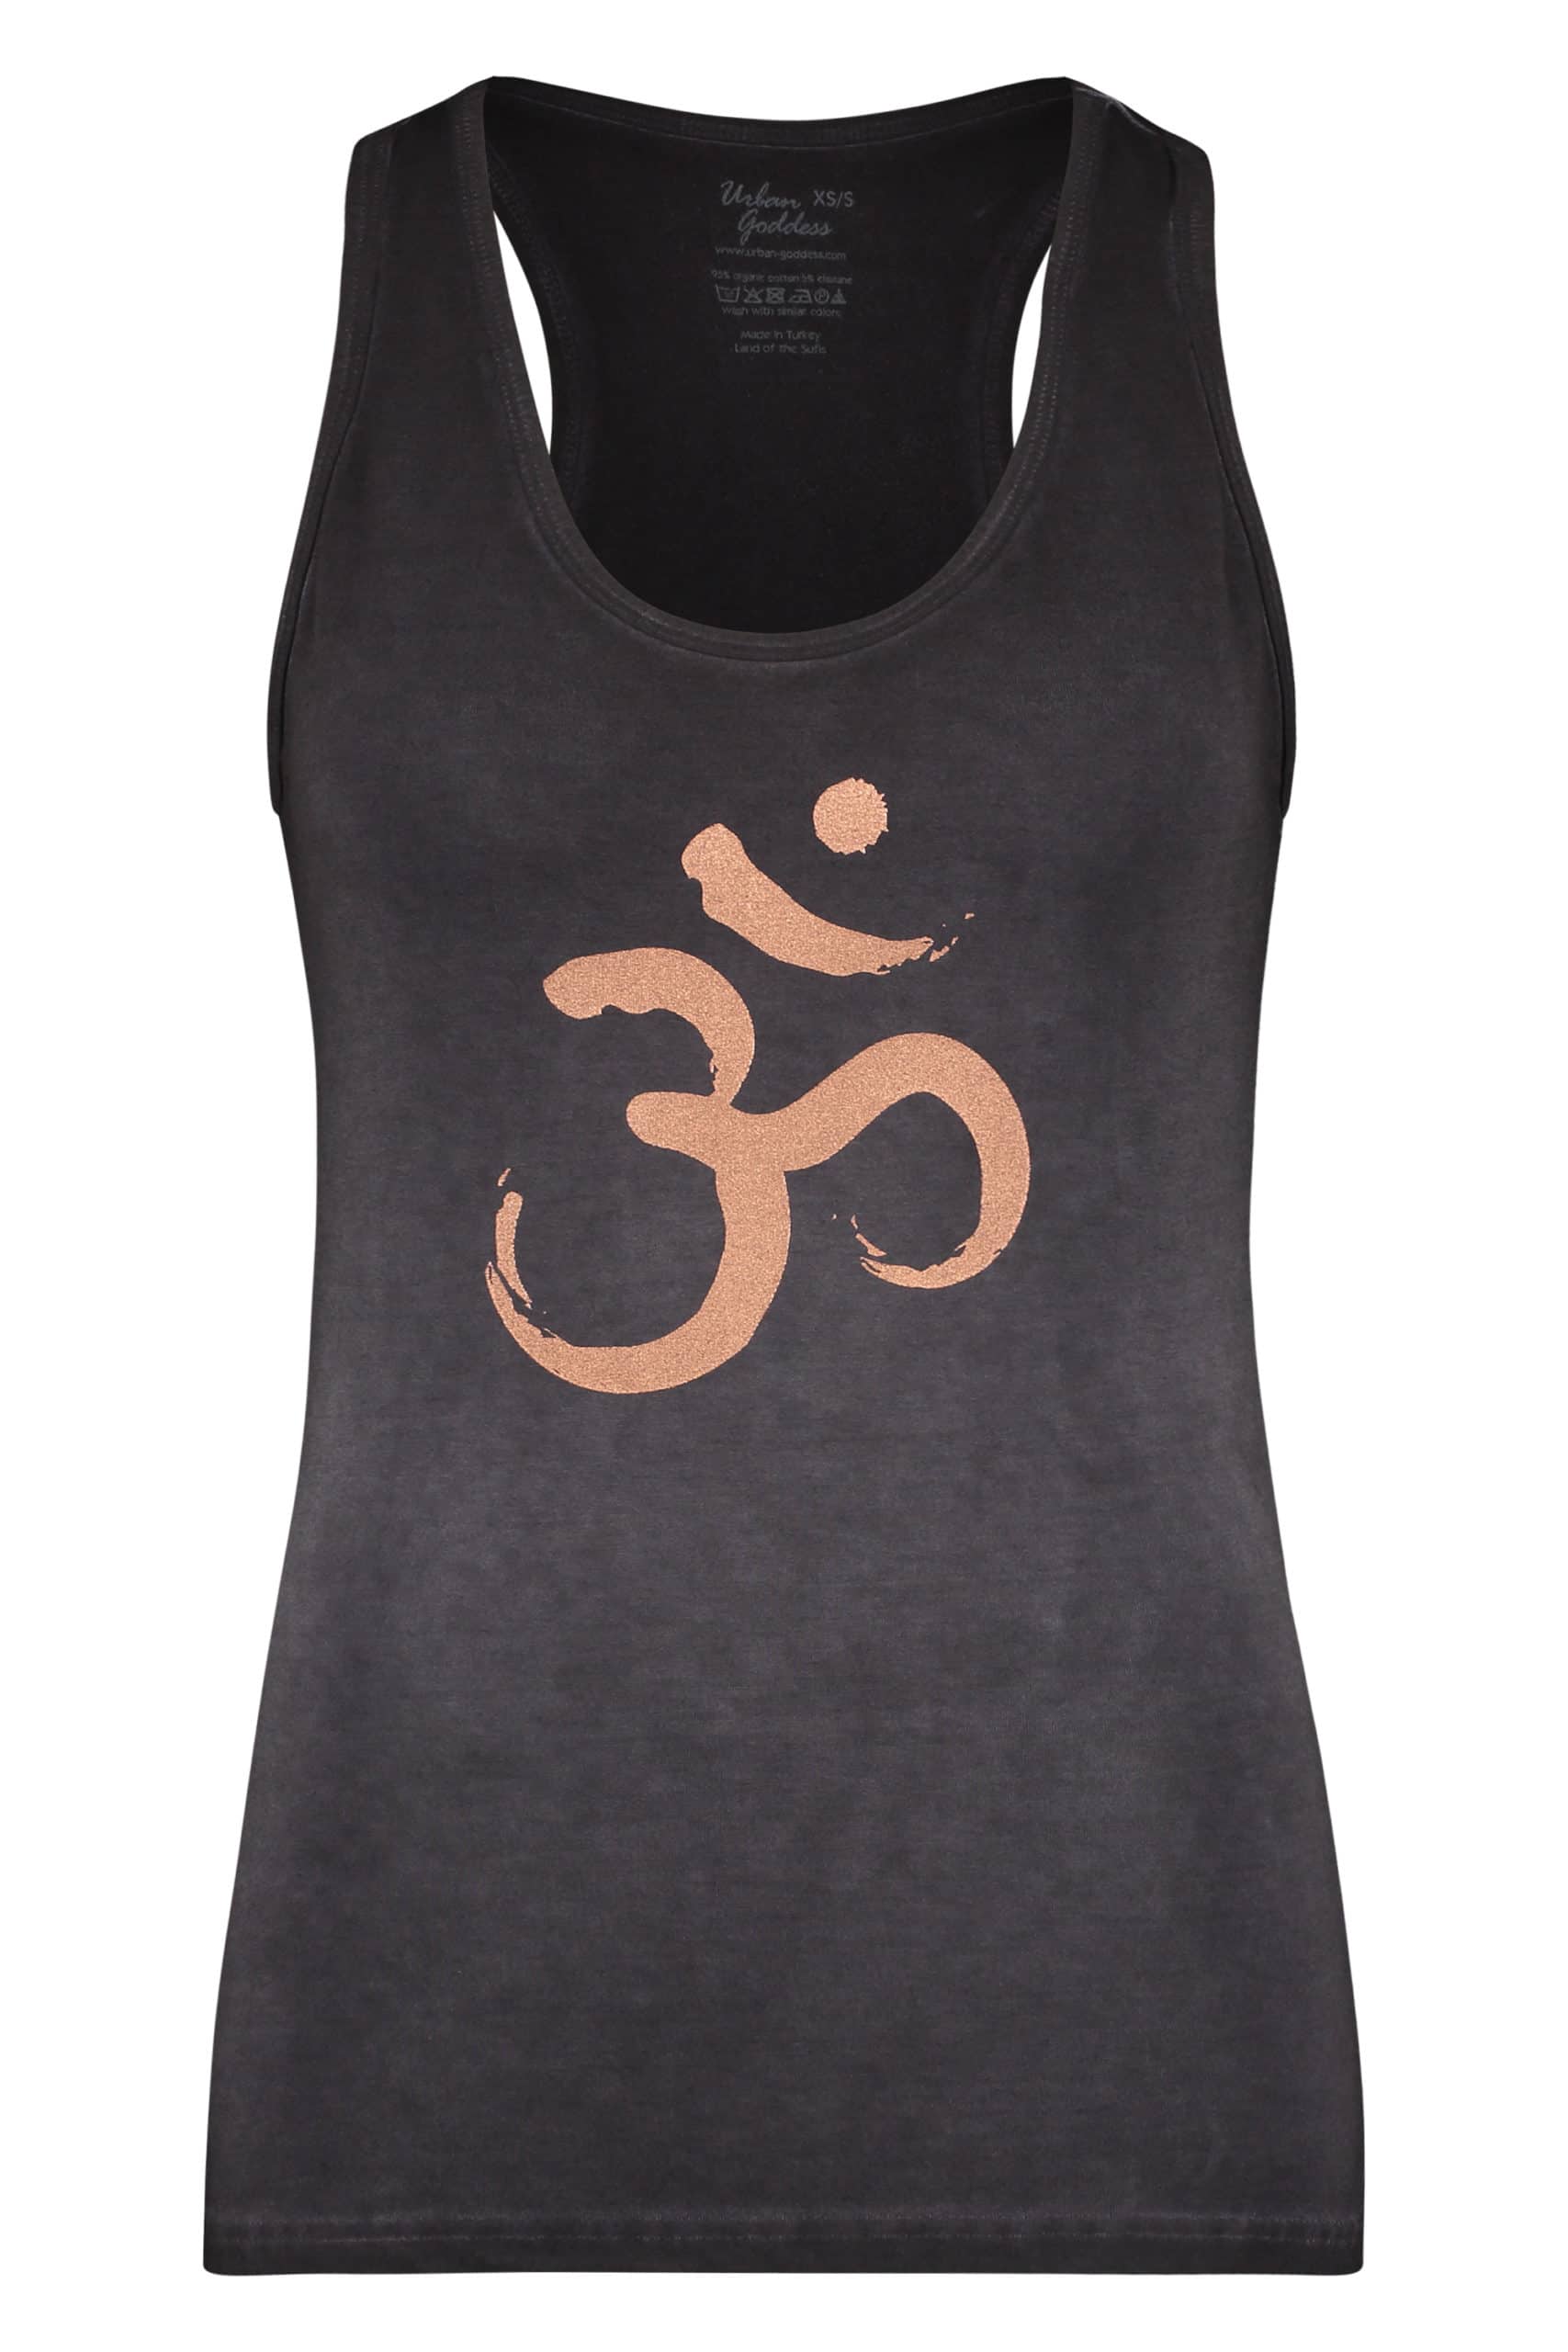 Hippe yoga tank top OM van Urban Goddess yoga kleding